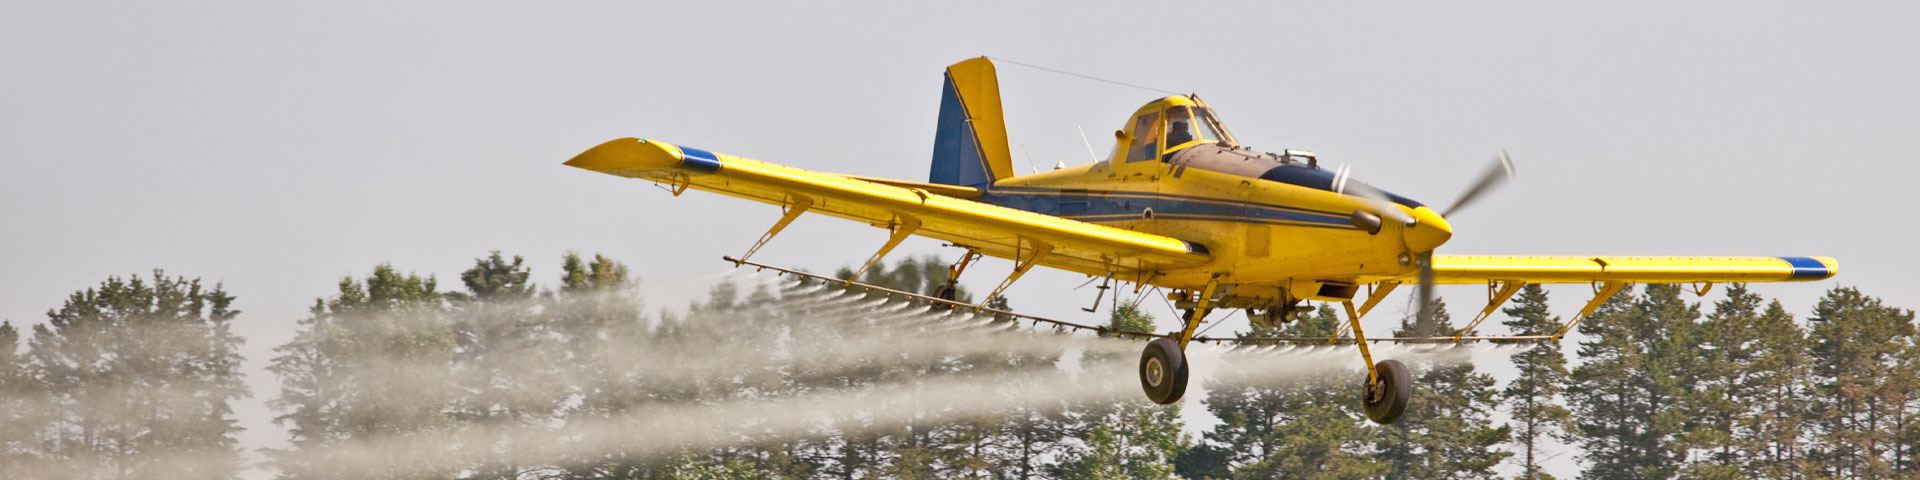 Plane crop sprayer flying over a field